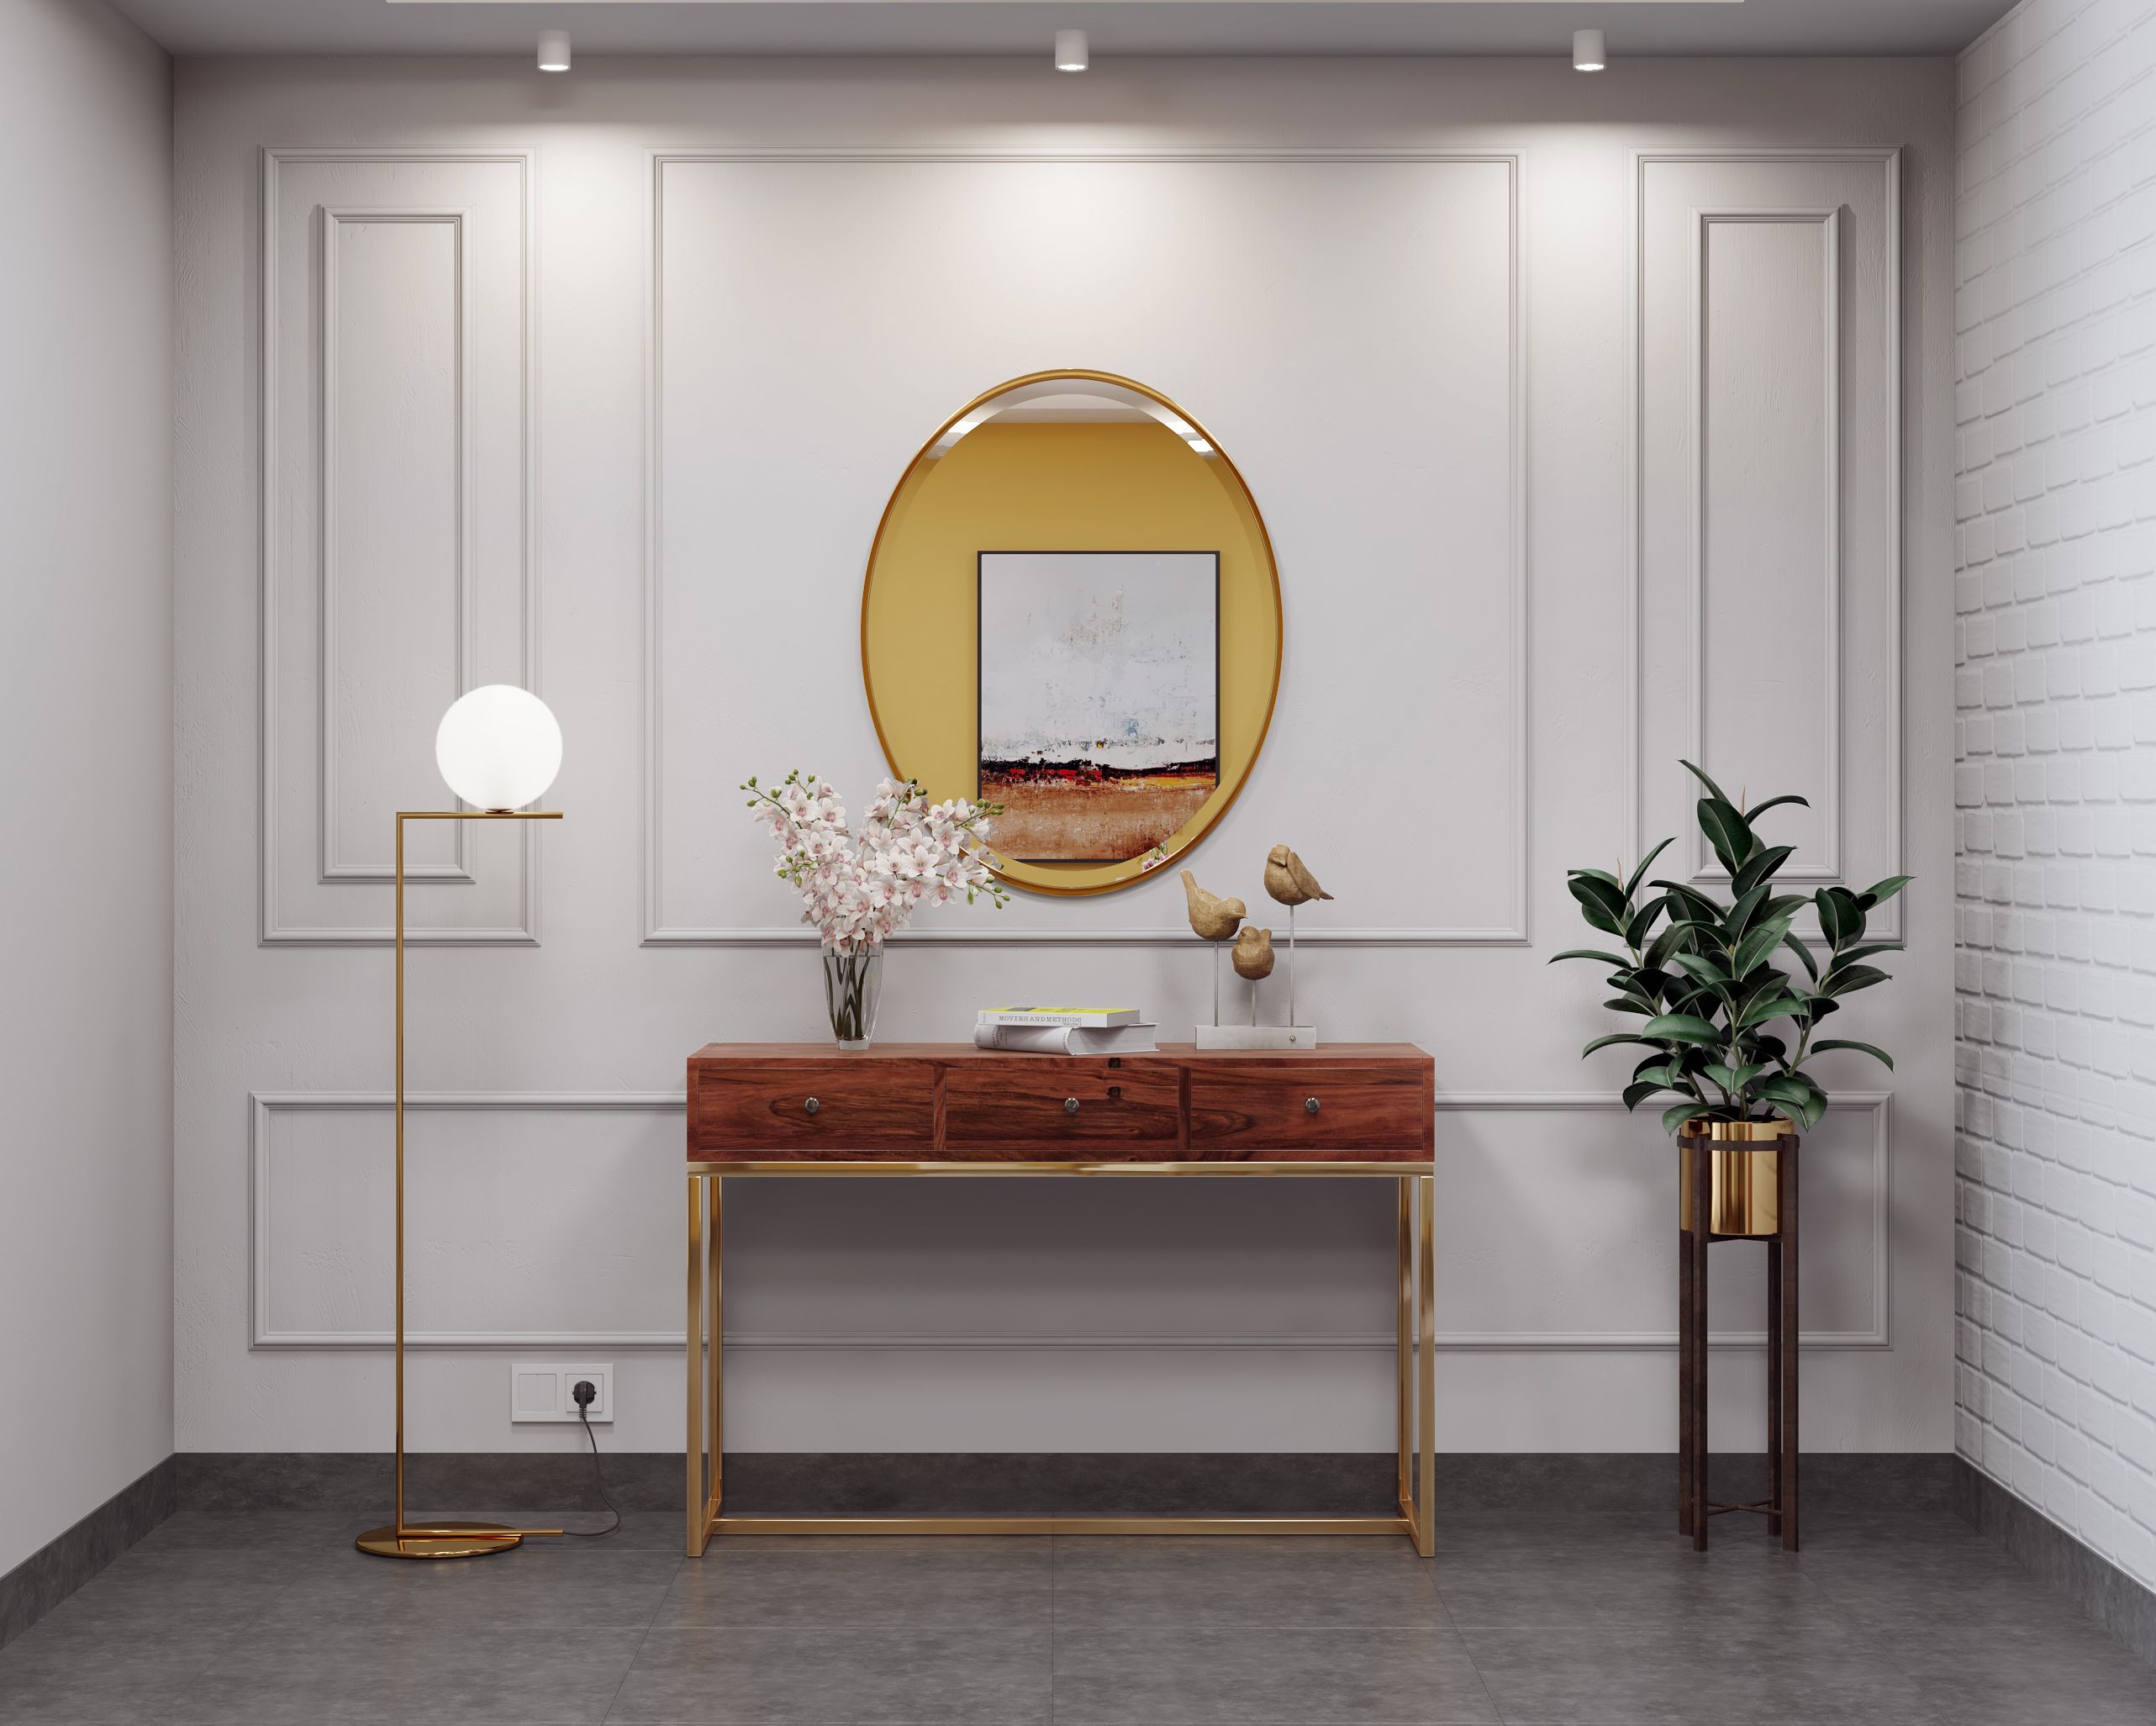 Classic Foyer Design Idea With Oval Mirror